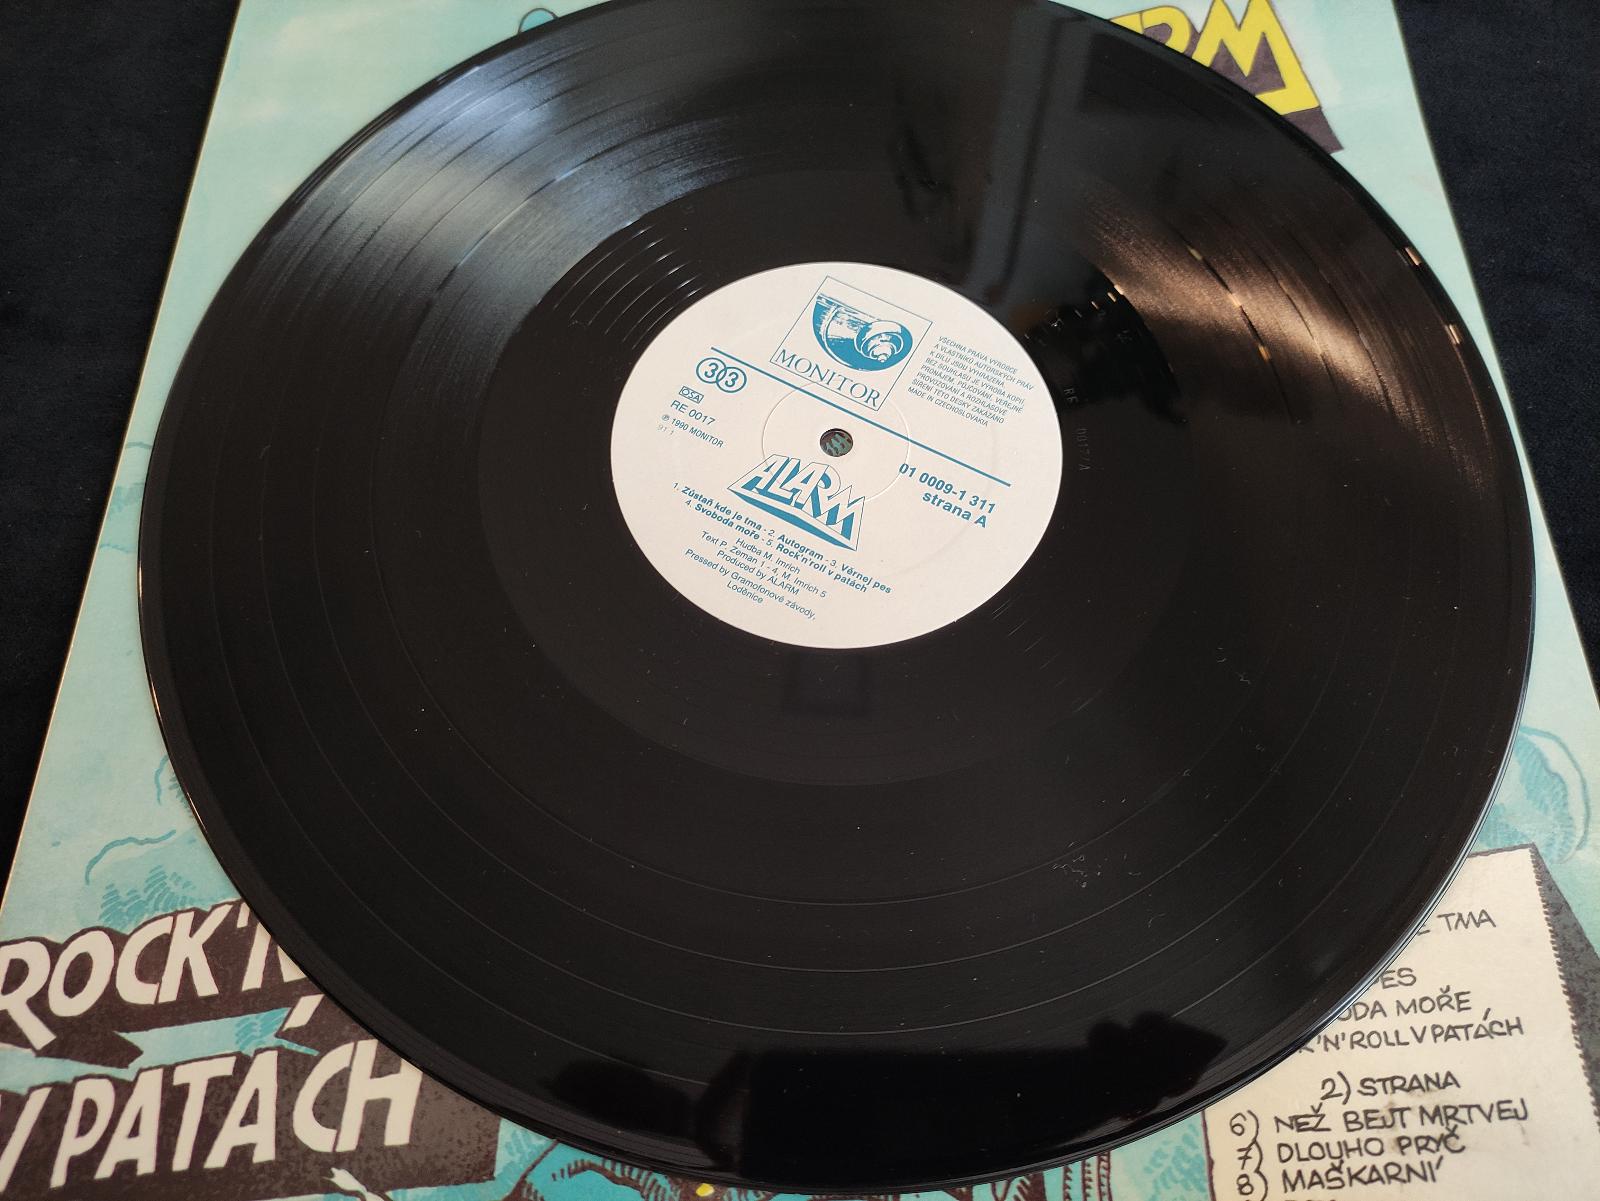 Alarm (M. Imrich) - Rock 'n' roll v patách, (cover Saudek) 1990 - LP / Vinylové desky